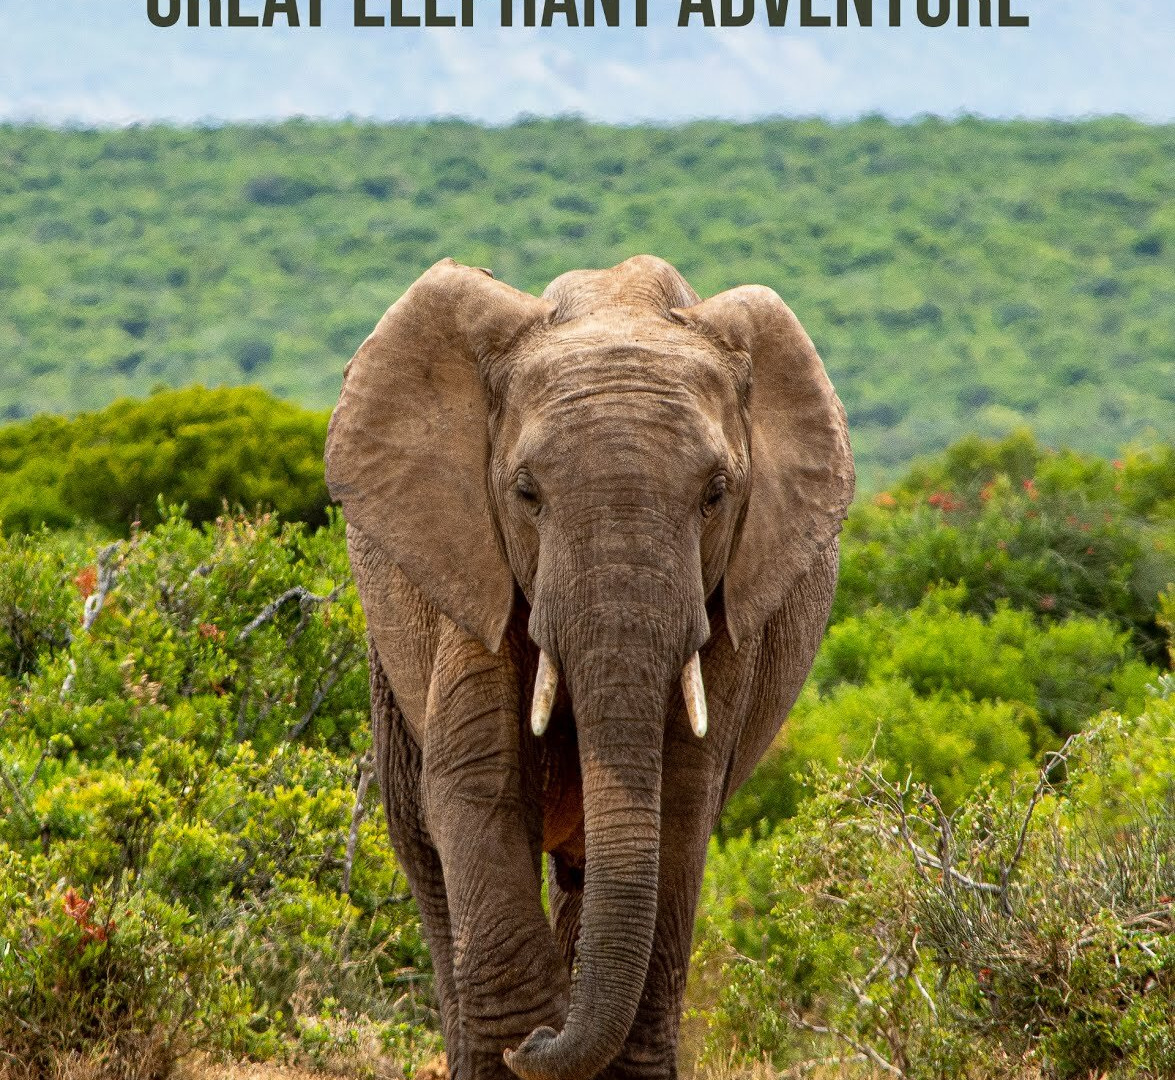 Show Paul O'Grady's Great Elephant Adventure